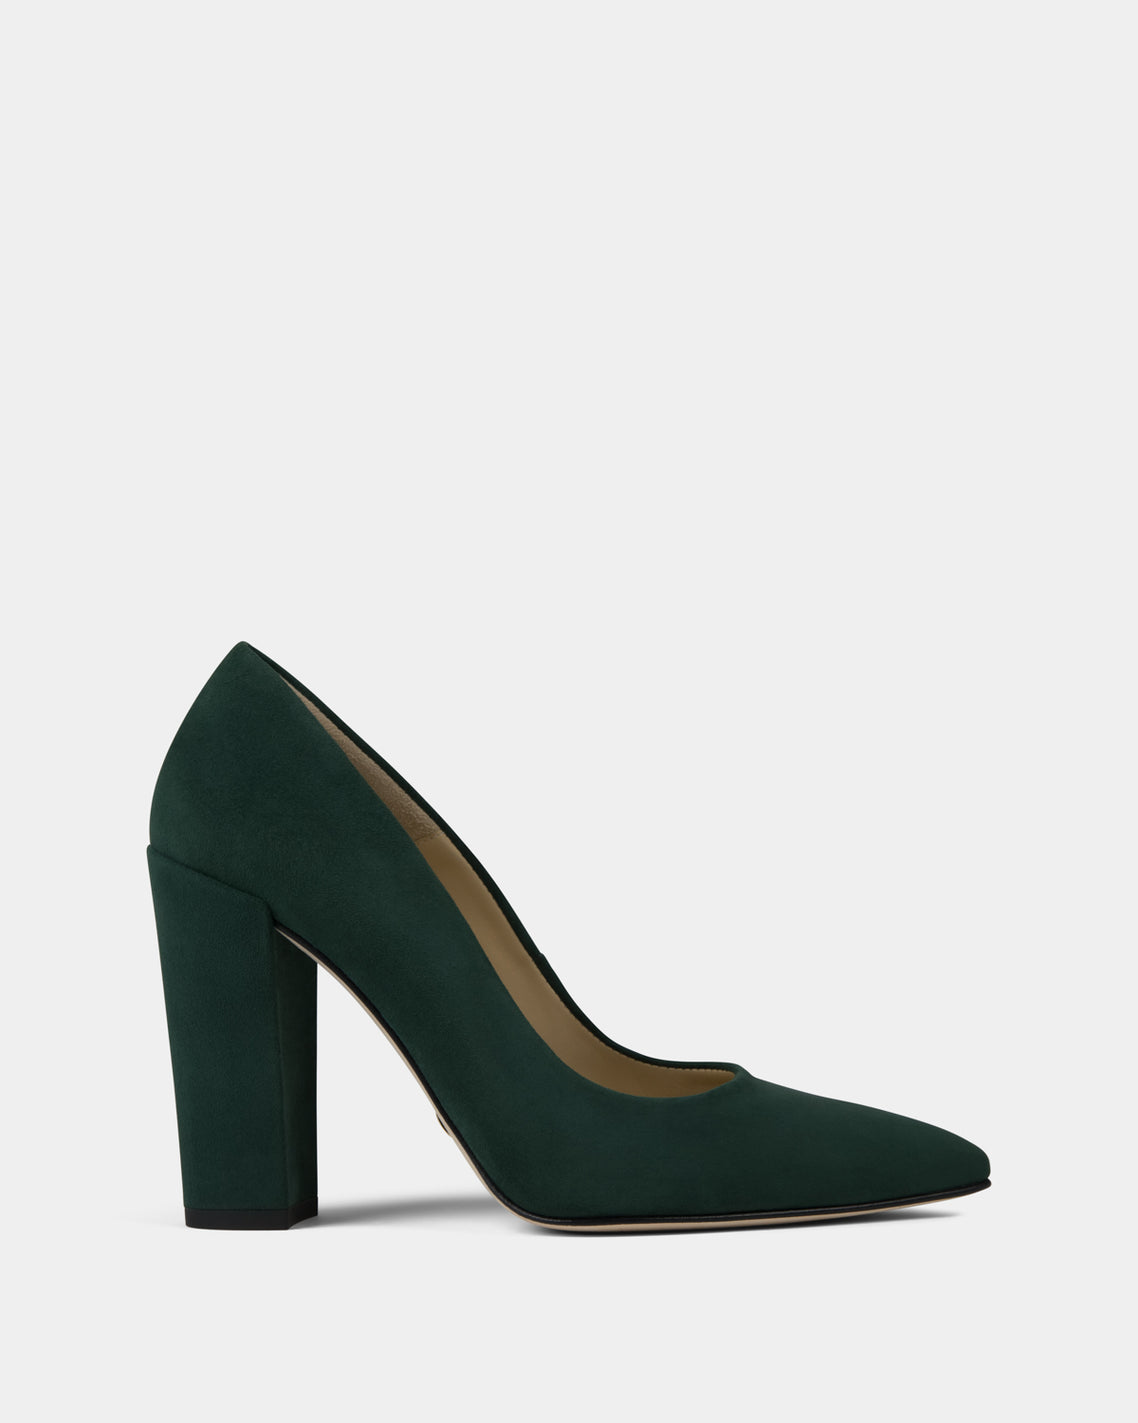 kallu-kallú-dark-green-suede-leather-shoes-for-women-made-in-spain-heels-shoes-high-heels-pums